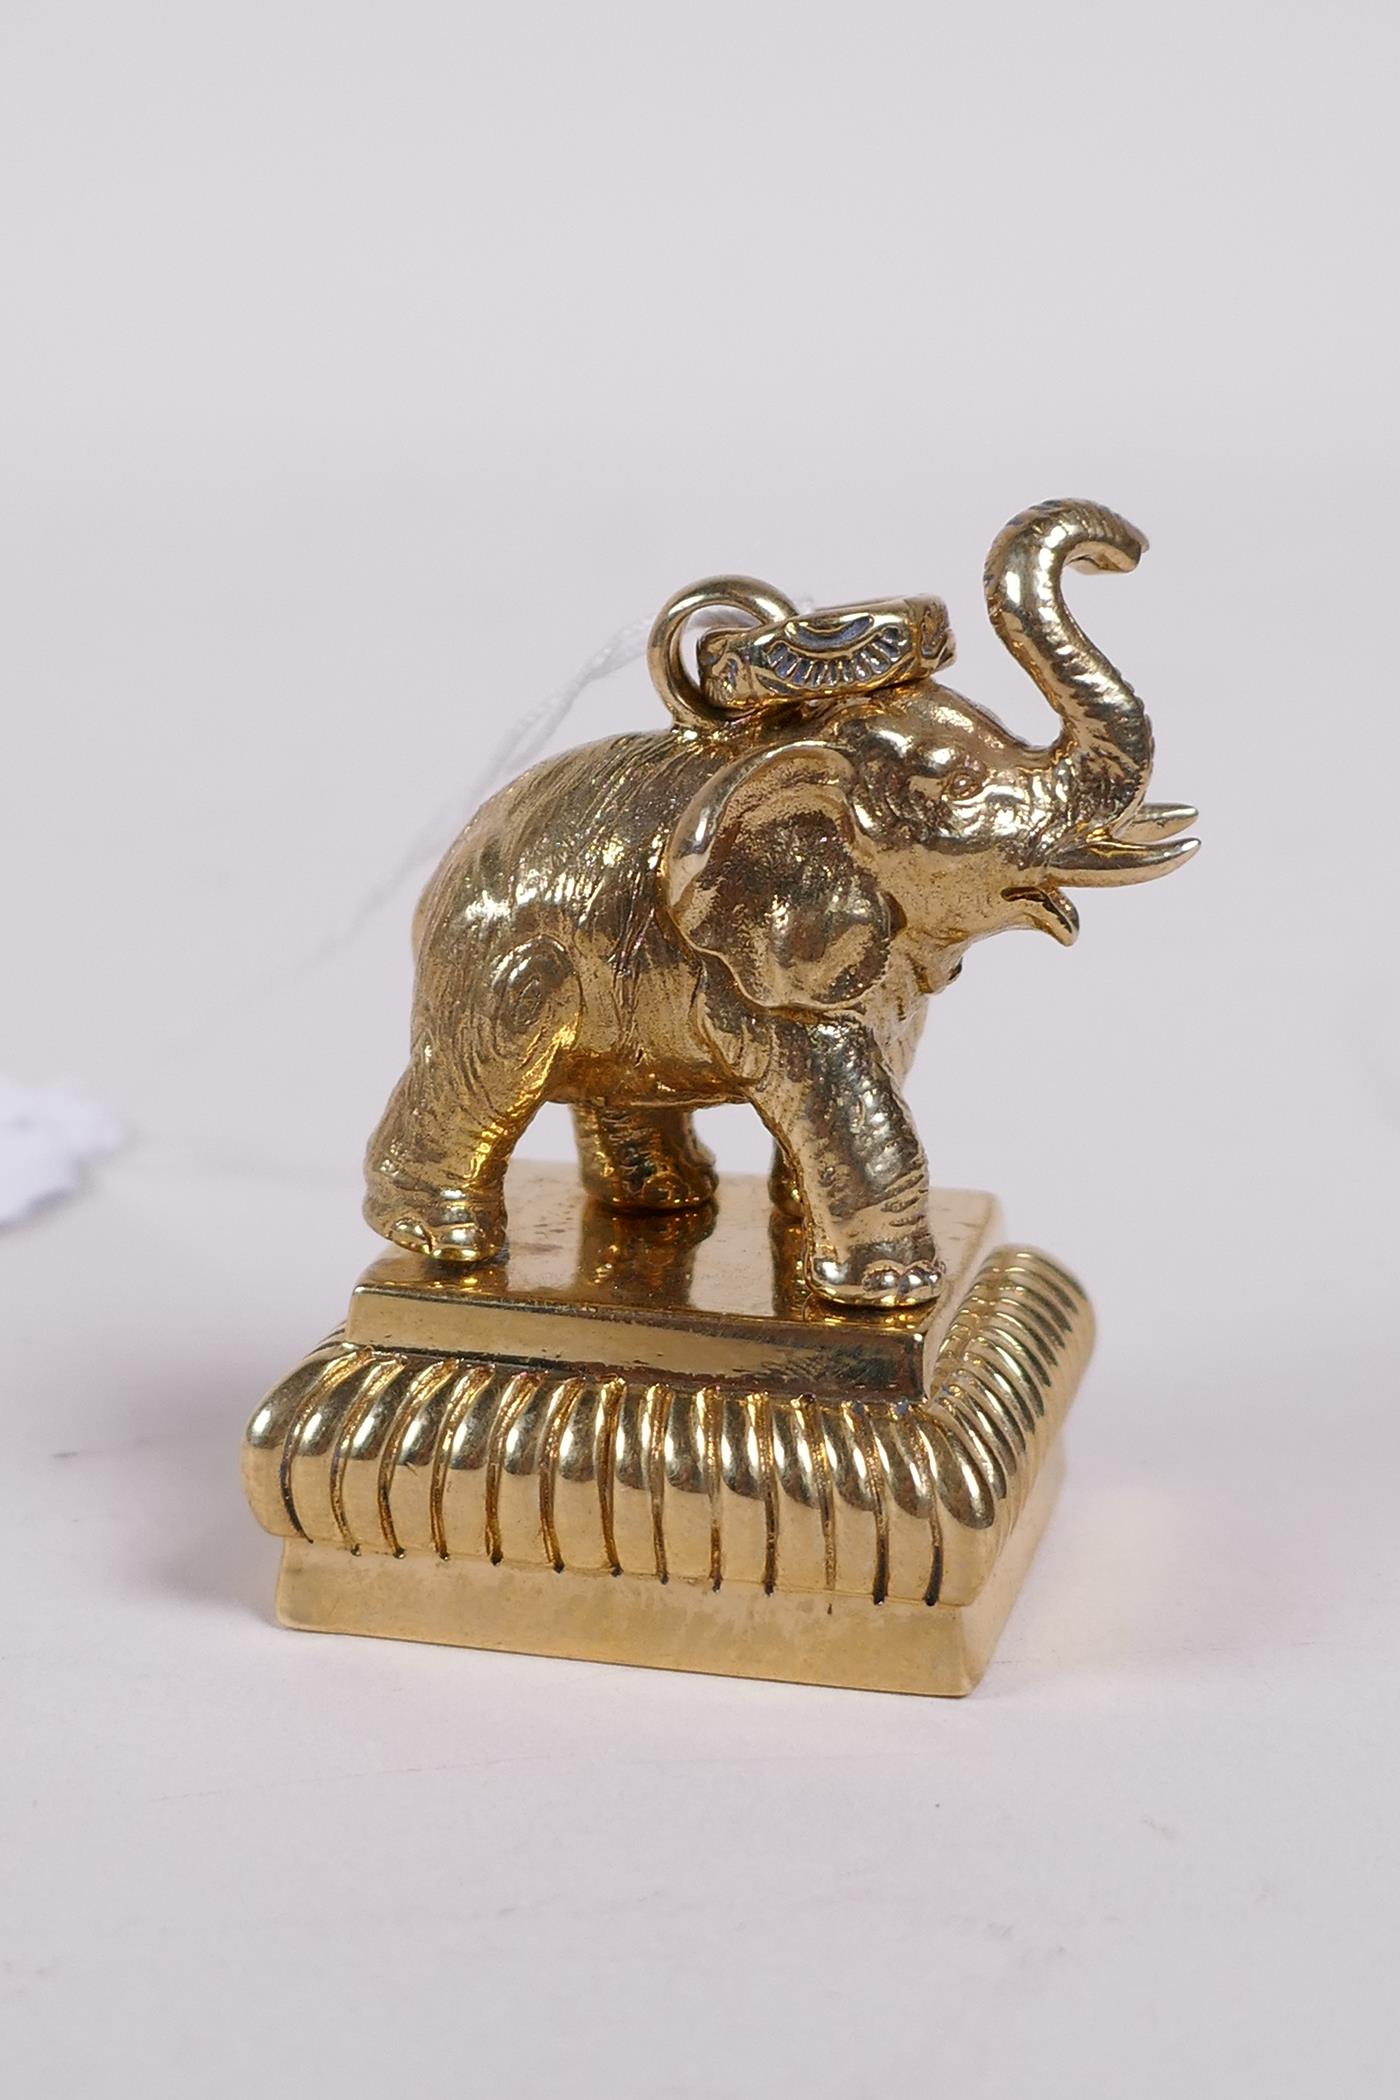 A gilt metal document seal with an elephant handle